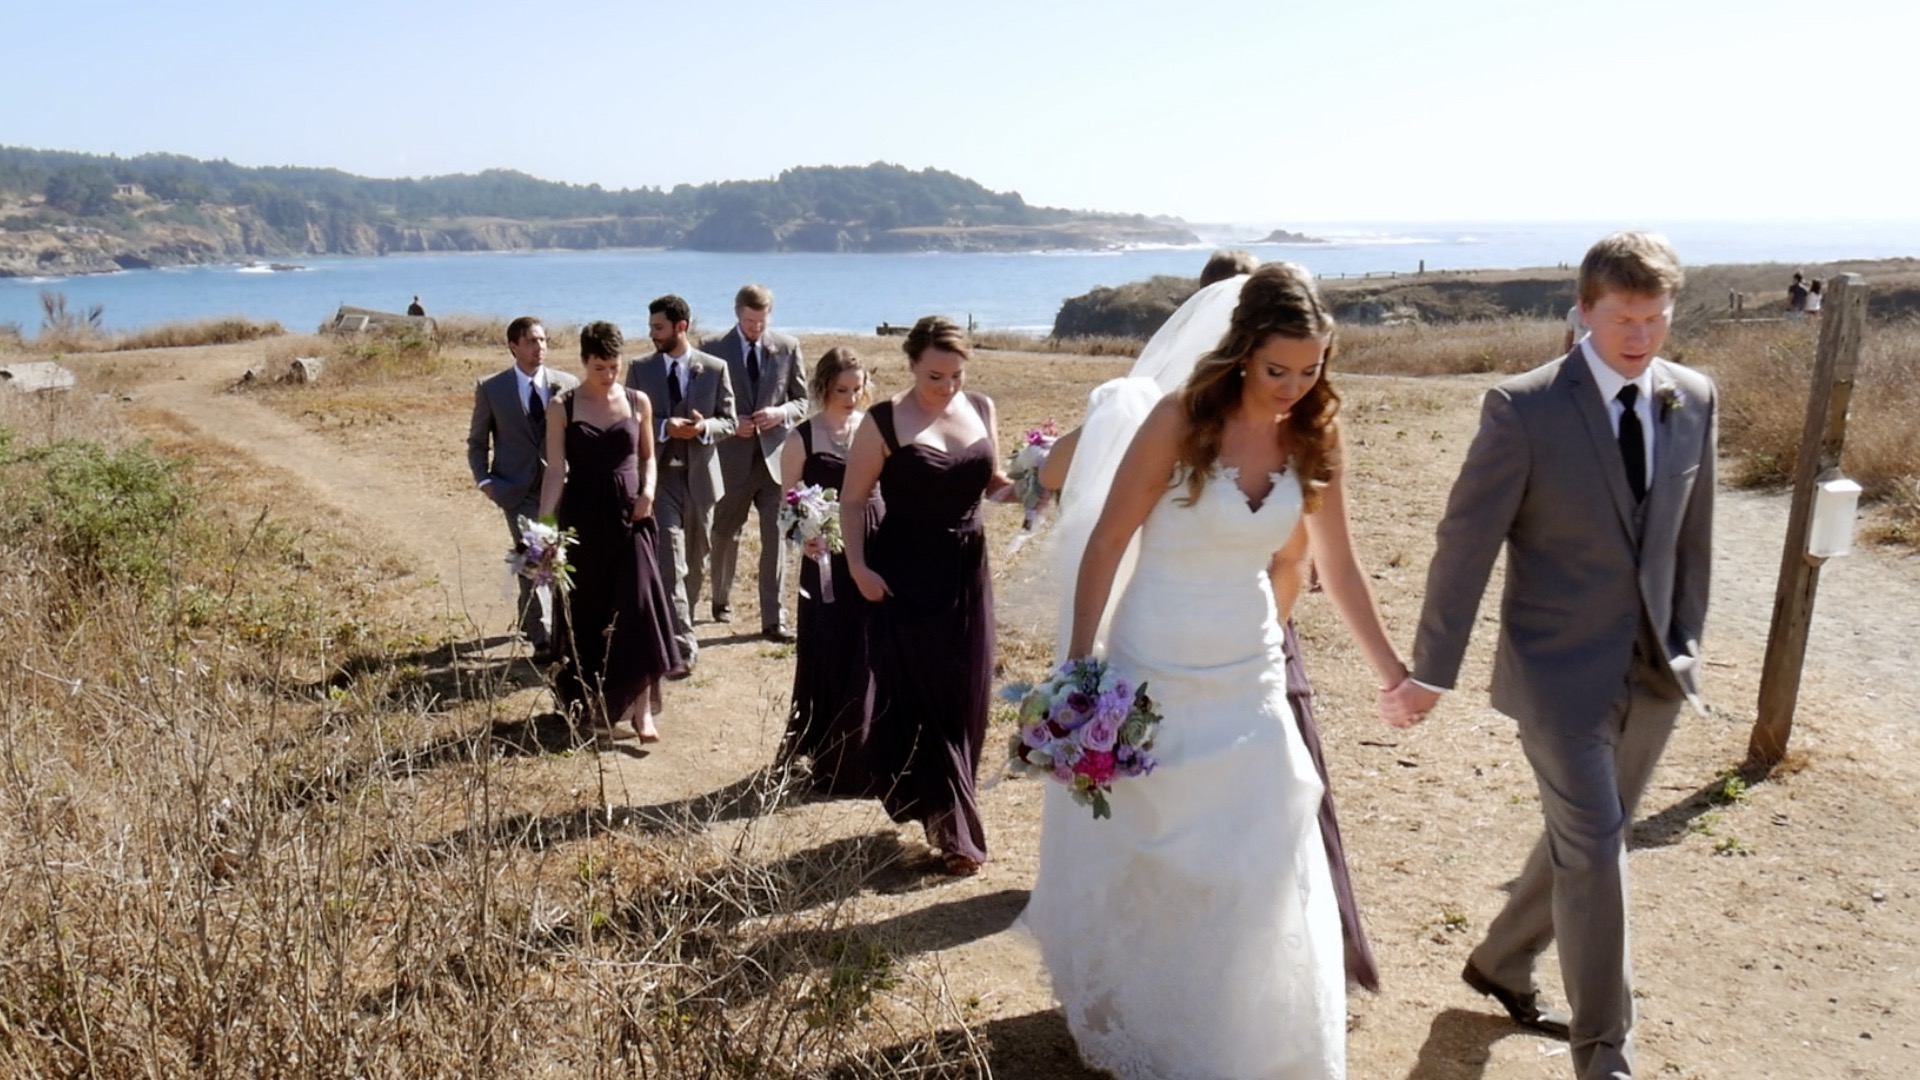 mendocino wedding video - bridal party walking back from bluff overlooking ocean in mendocino